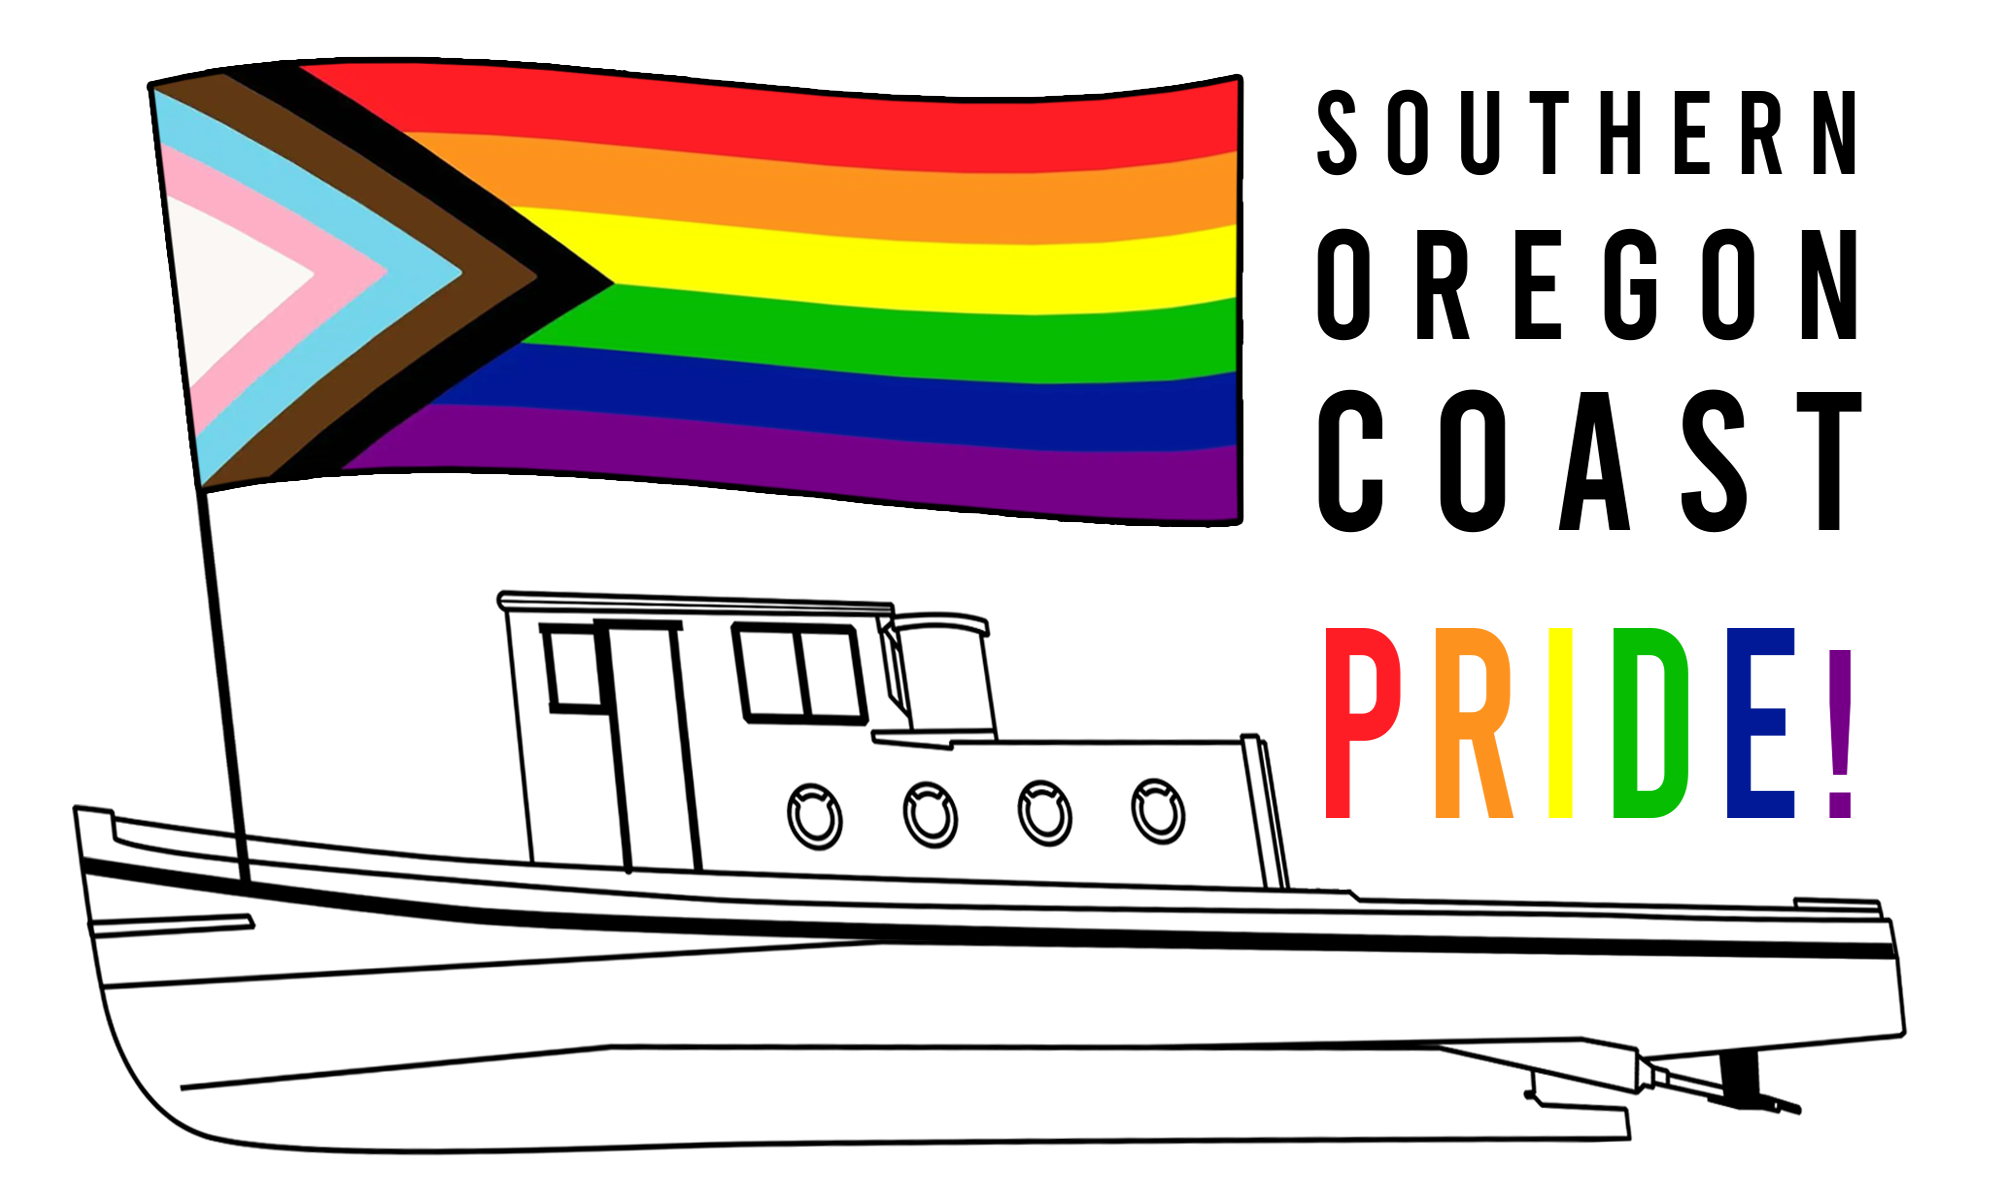 Southern Oregon Coast Pride! logo with ship/boat and rainbow flag